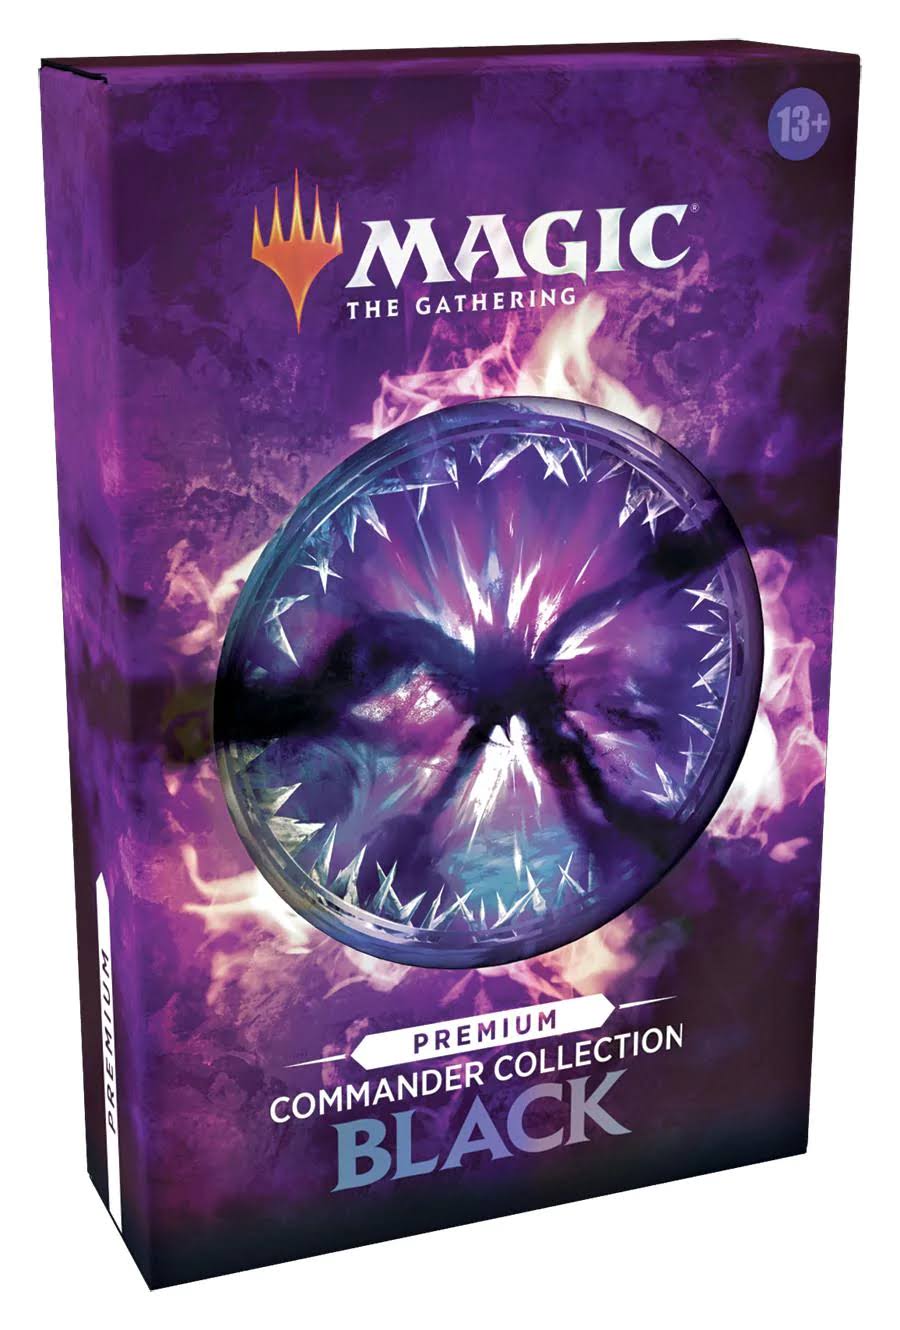 Magic The Gathering - Commander Collection - Black - Premium